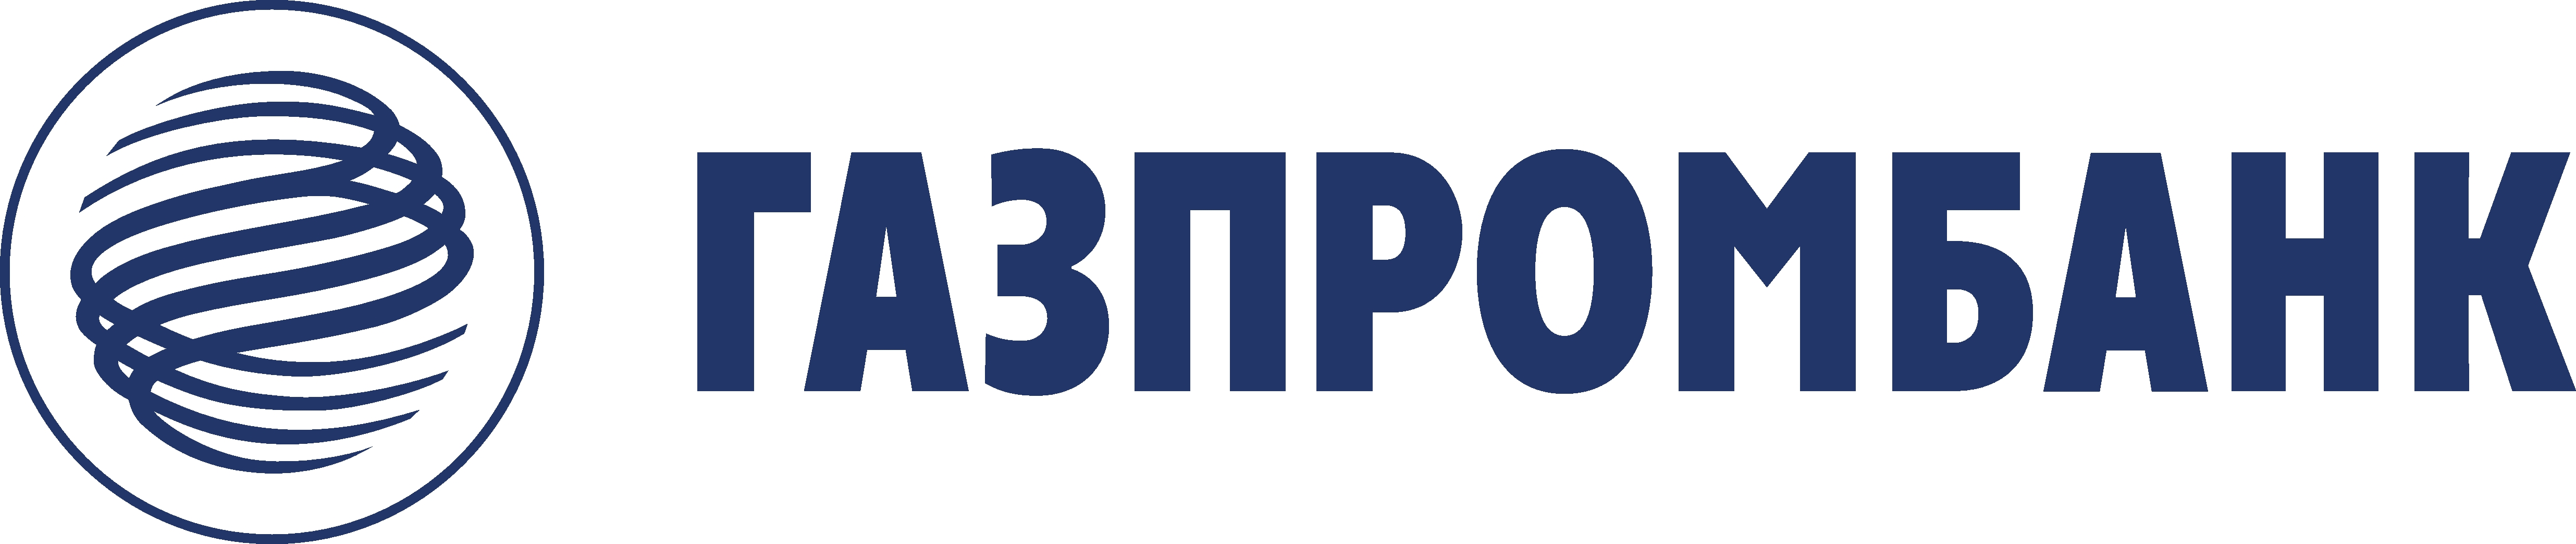 Срок обращения облигаций Банка ГПБ (АО) серий БО-07, БО-08, БО-09 и БО-10 увеличен до 10 лет - «Газпромбанк»